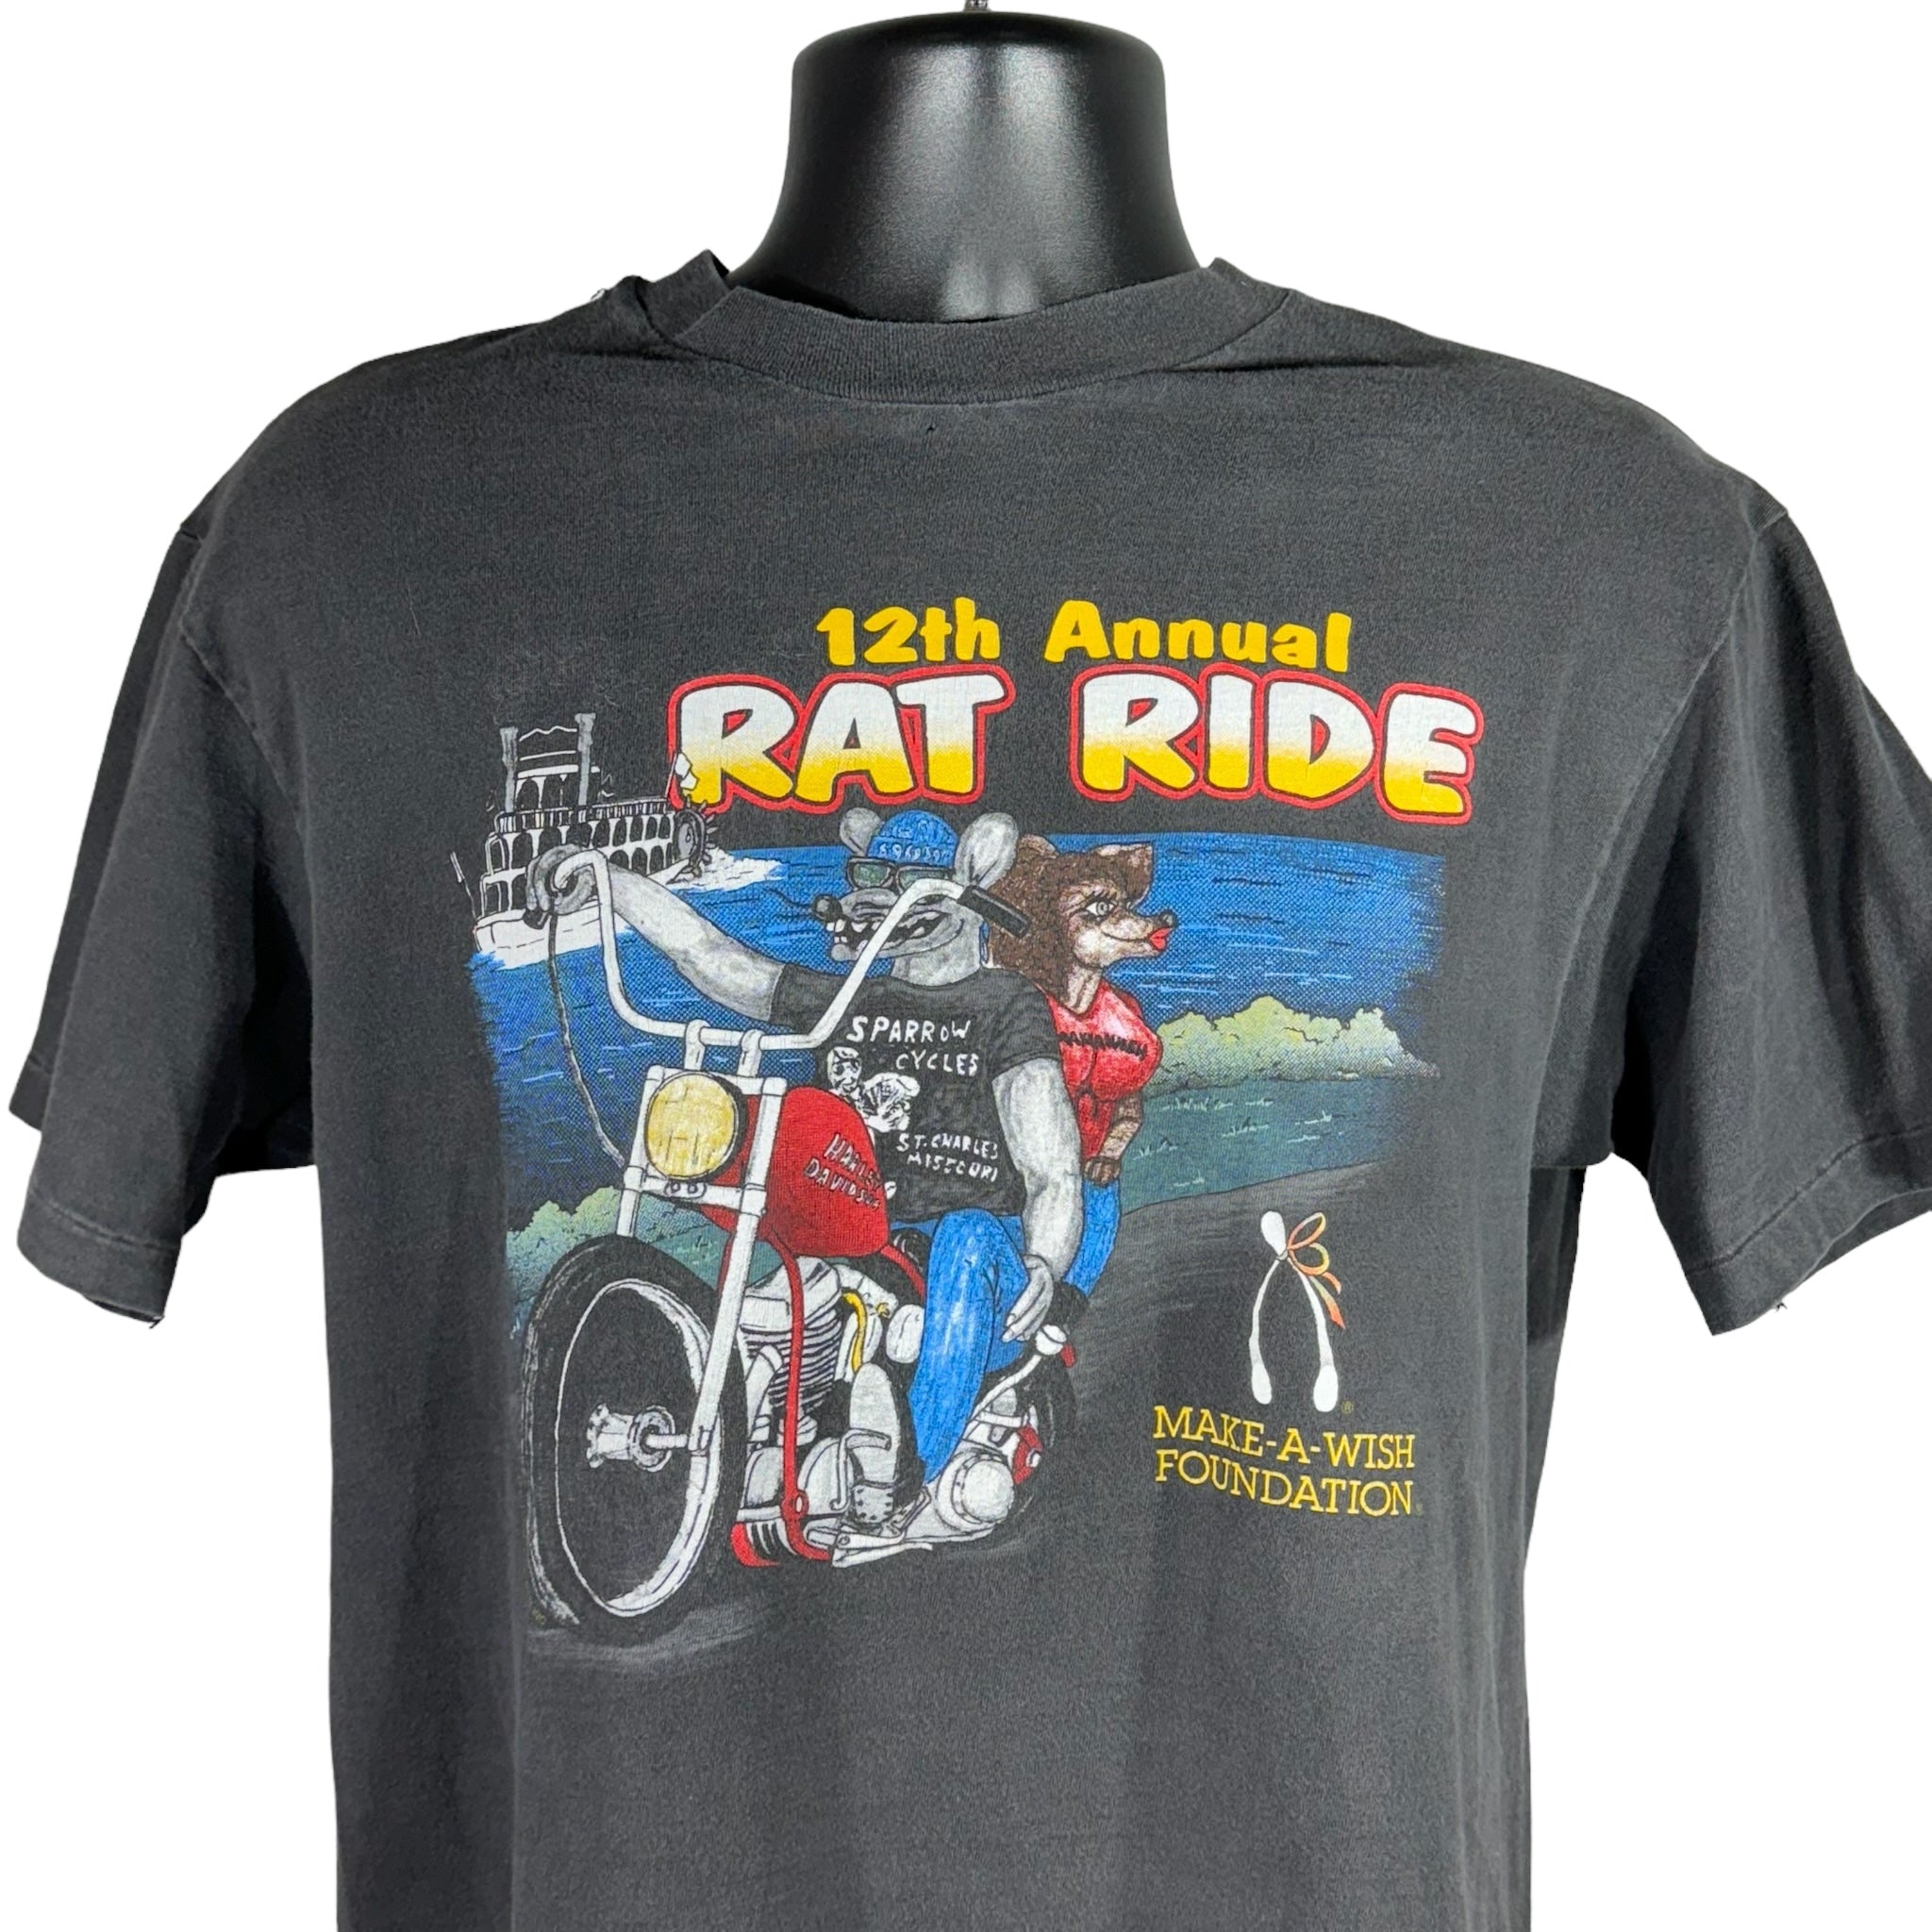 Vintage 12th Annual Rat Ride Motorcycle Tee 90s